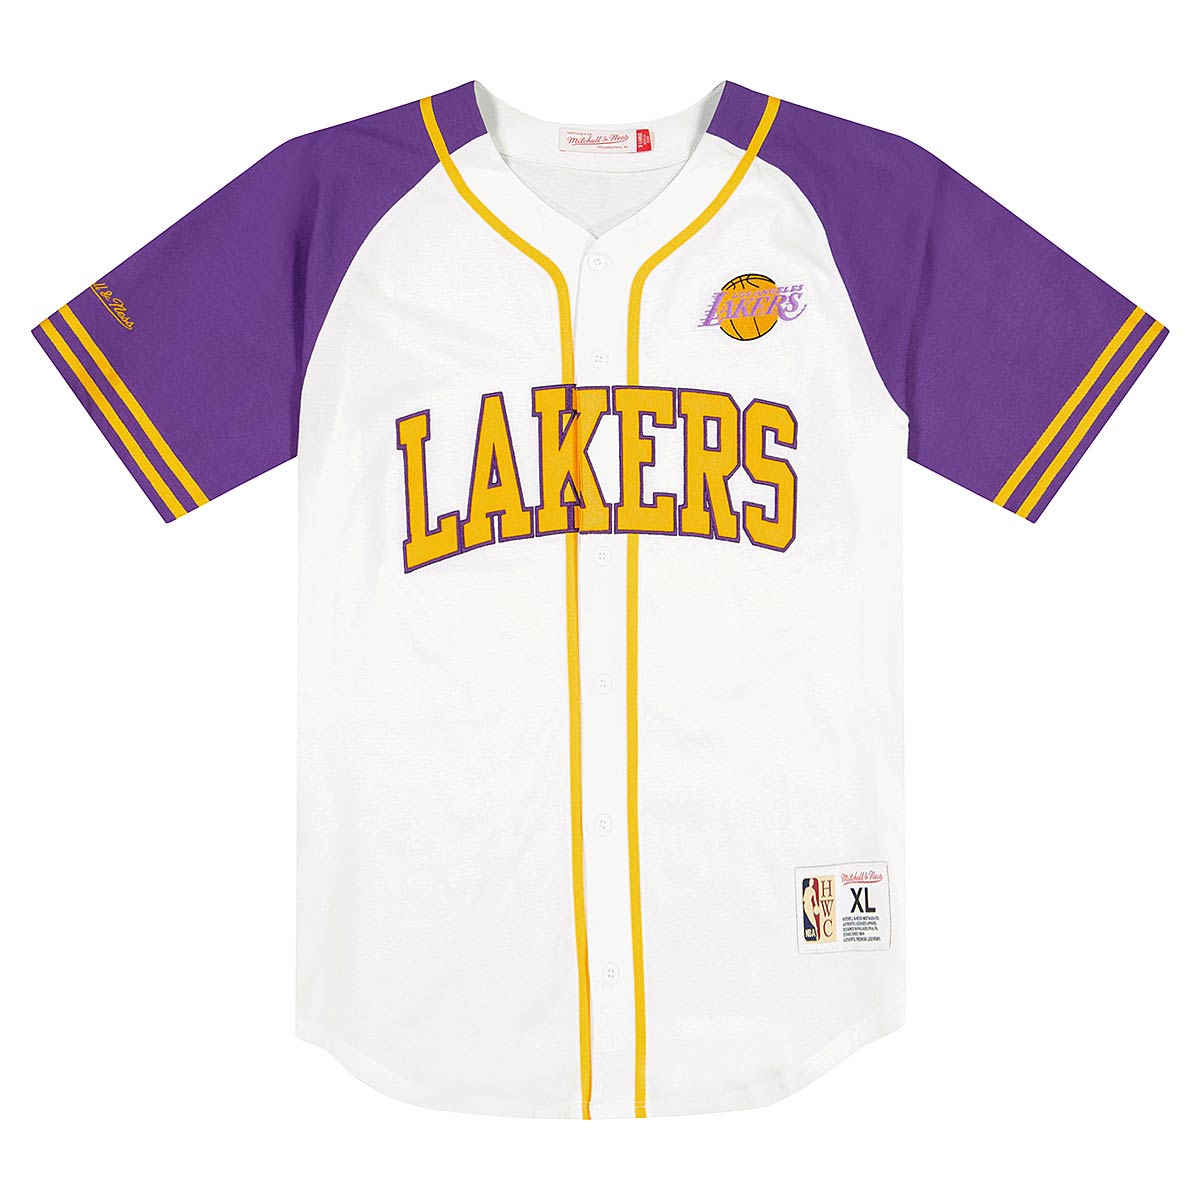 LOOK: Los Angeles Lakers City Series mock-up jerseys